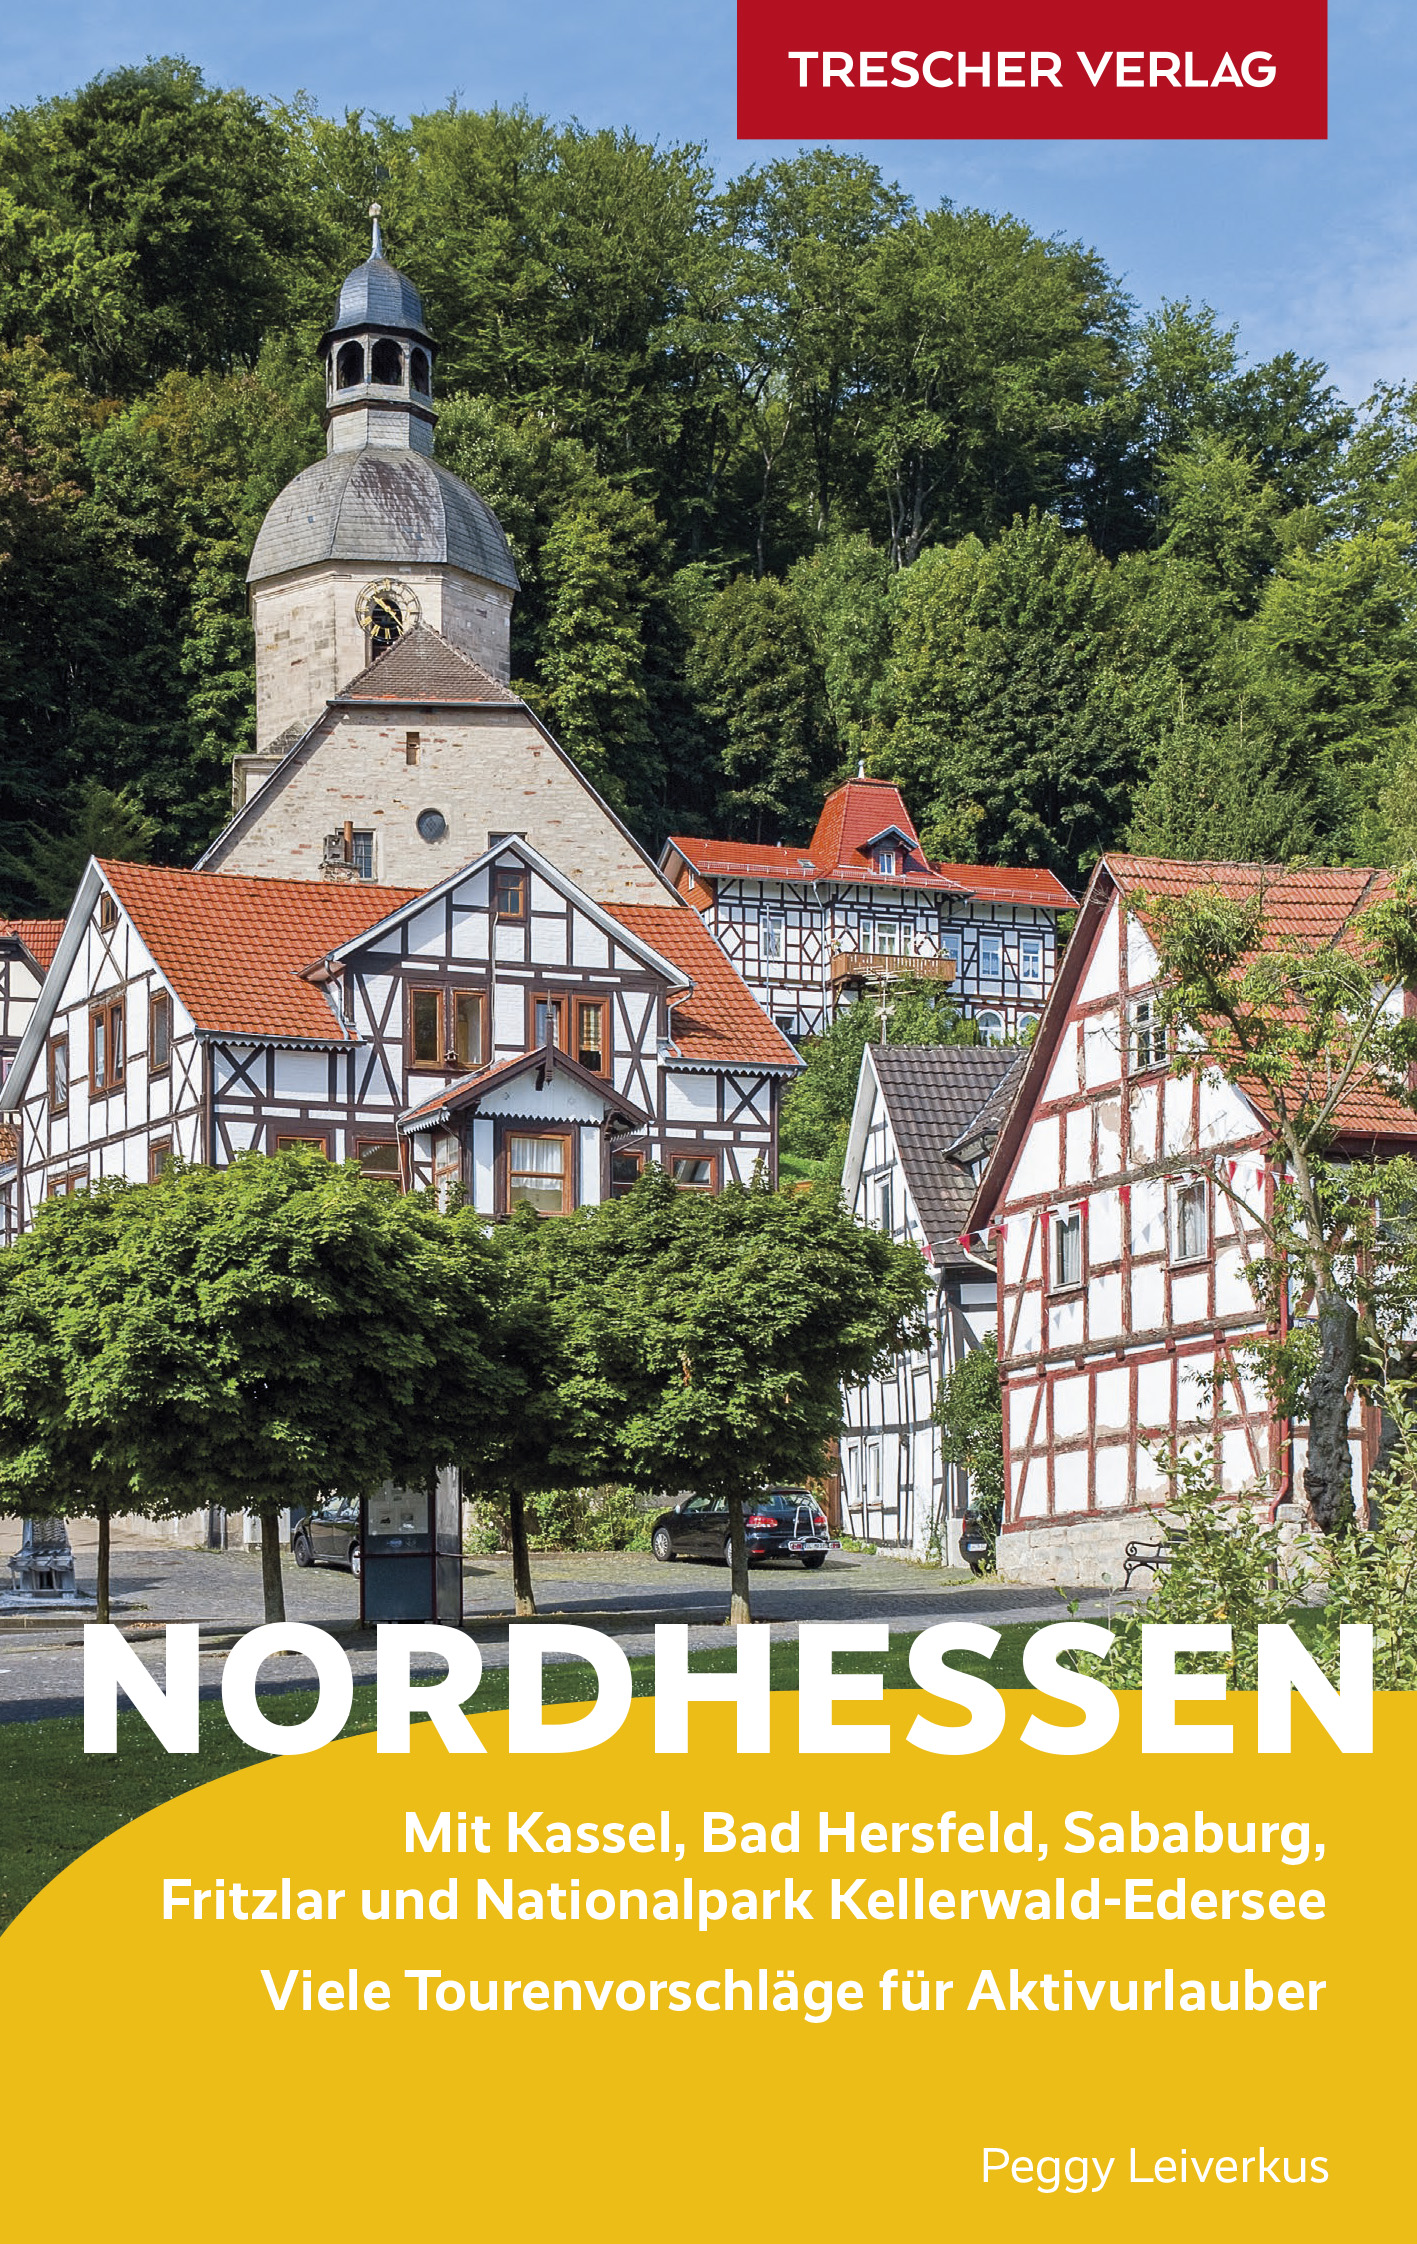 Online bestellen: Reisgids Nordhessen | Trescher Verlag